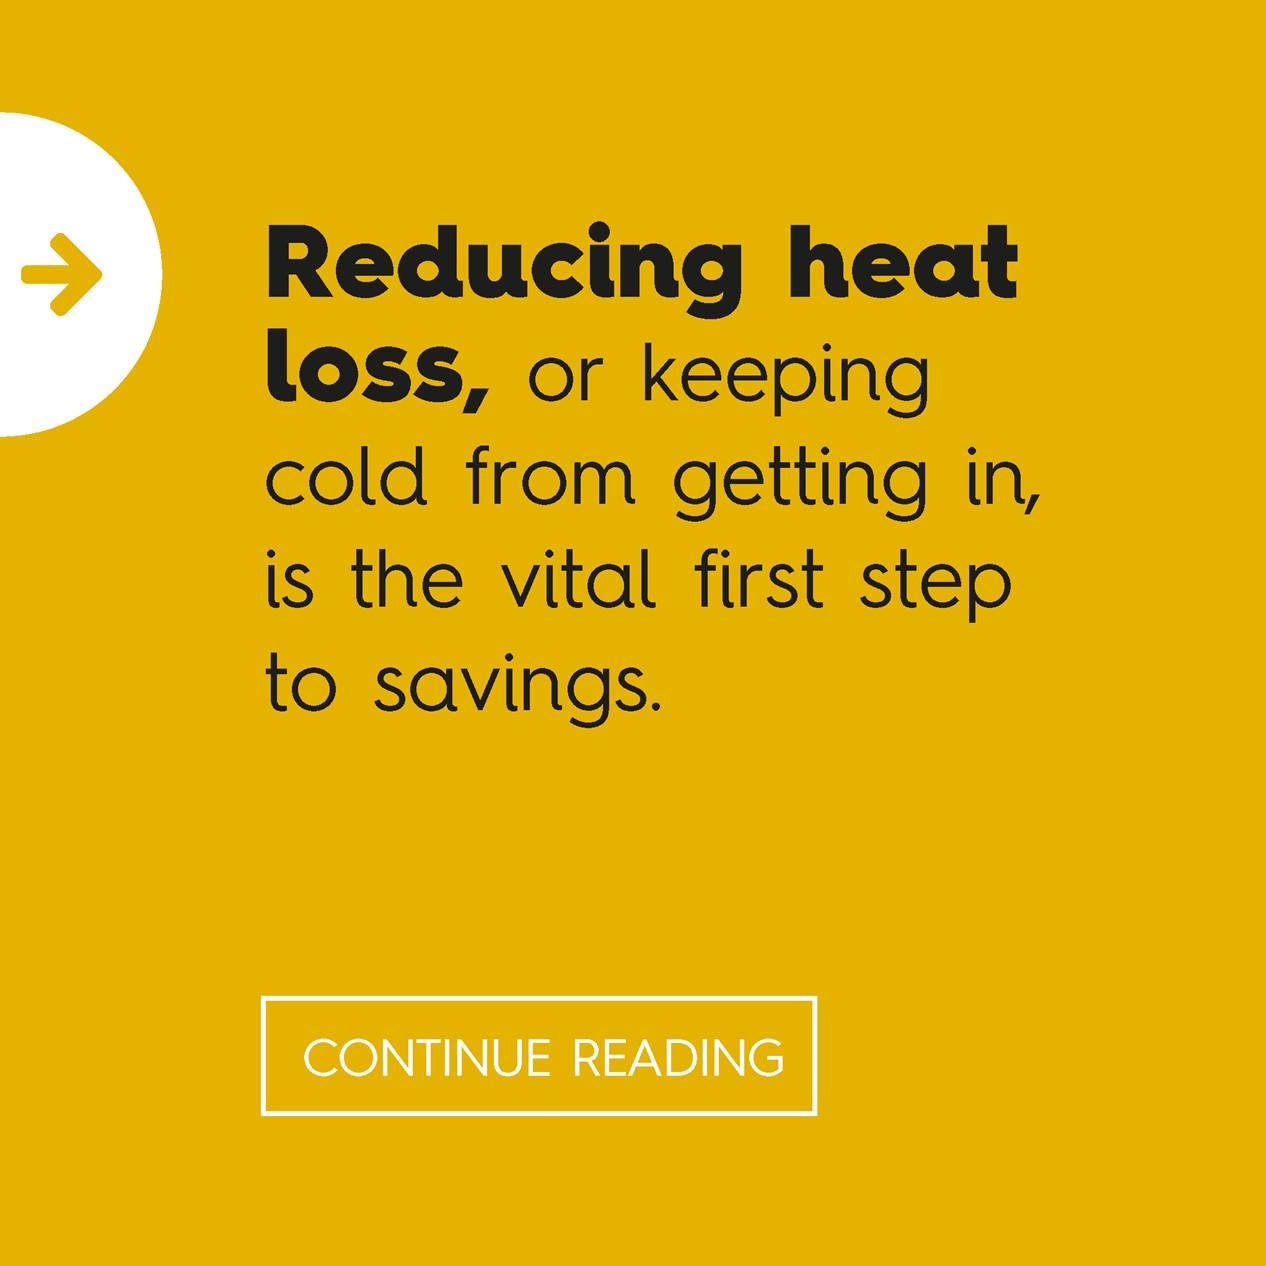 Reducing heat loss